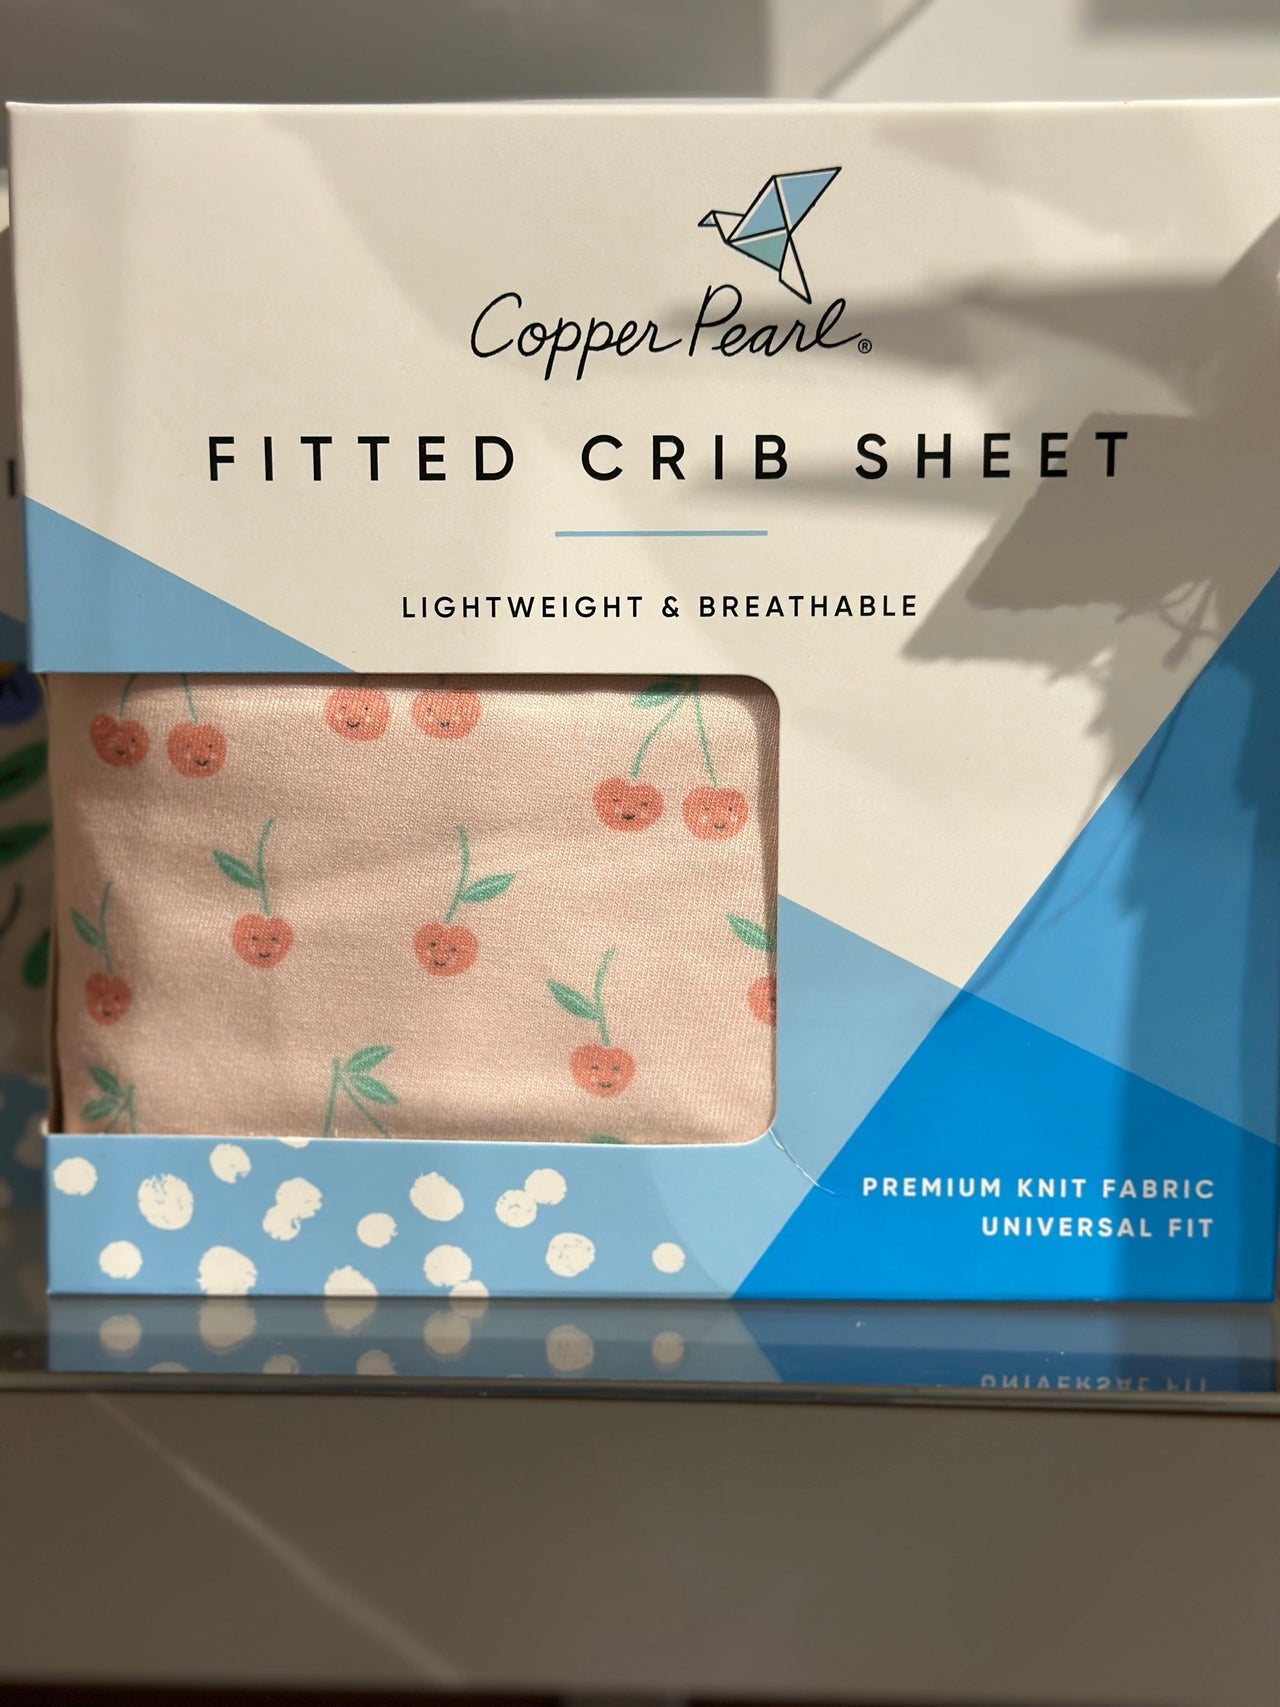 Copper Pearl Fitted Crib Sheet Carolina Baby aco crib sheet Cheery